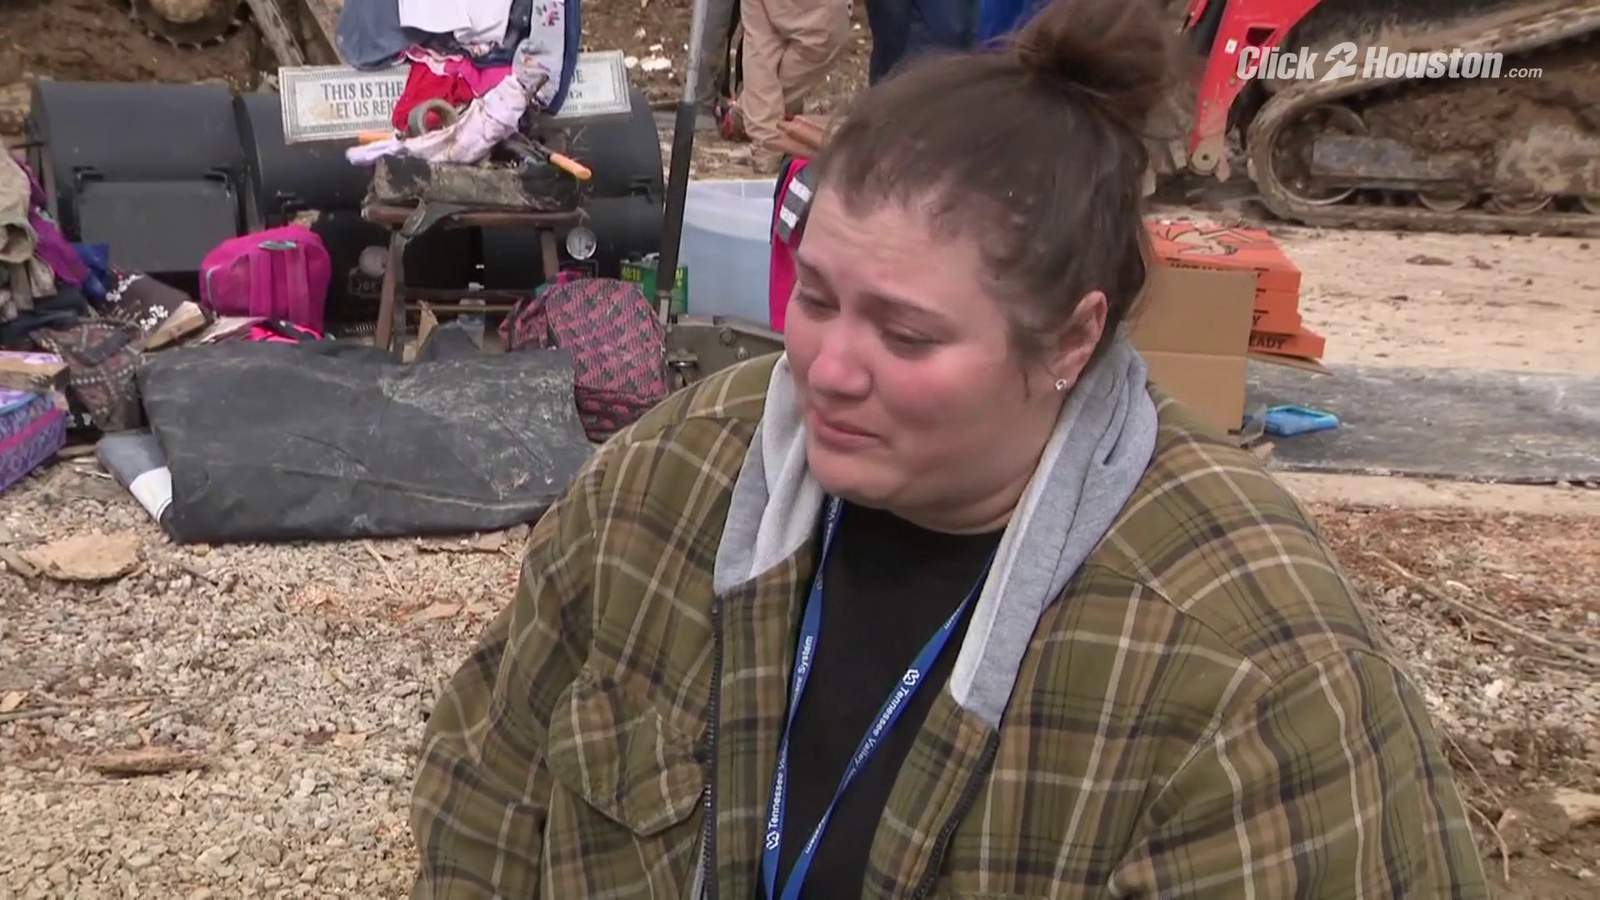 Nashville tornado survivor shares harrowing story of fear, survival